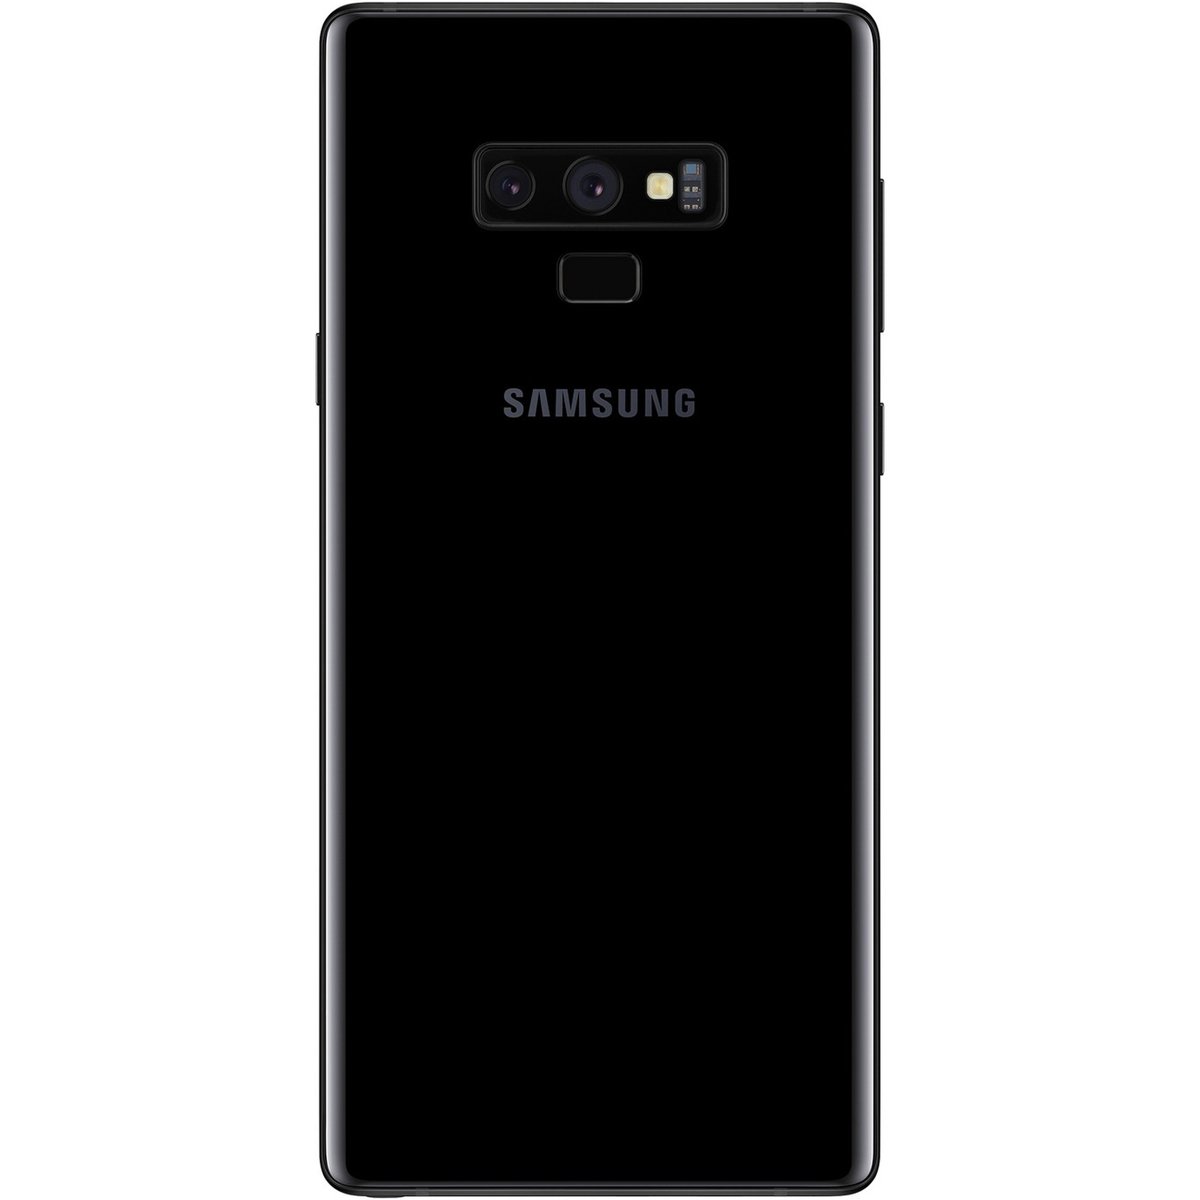 Samsung Galaxy Note9 SMN960F 128GB Black